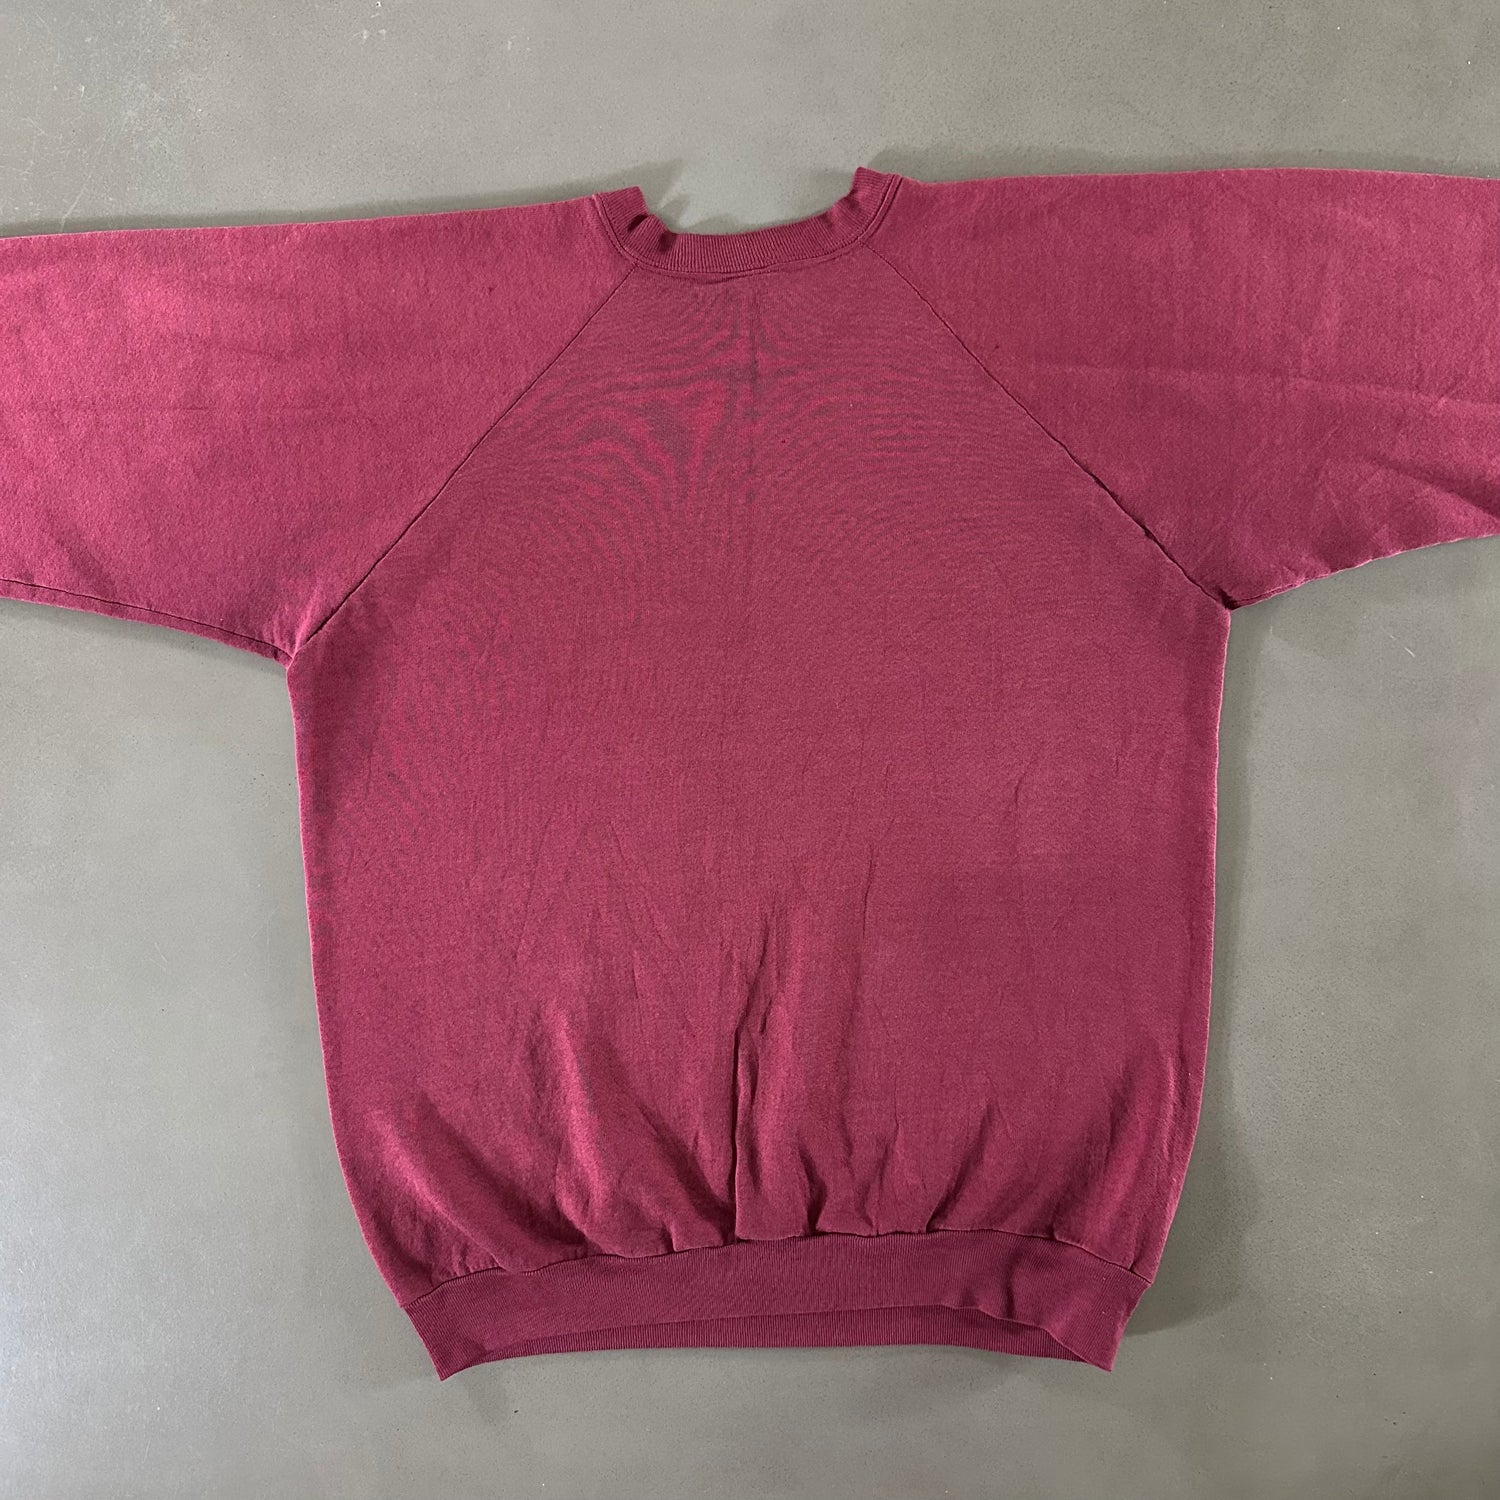 Vintage 1990s Texas Sweatshirt size XL